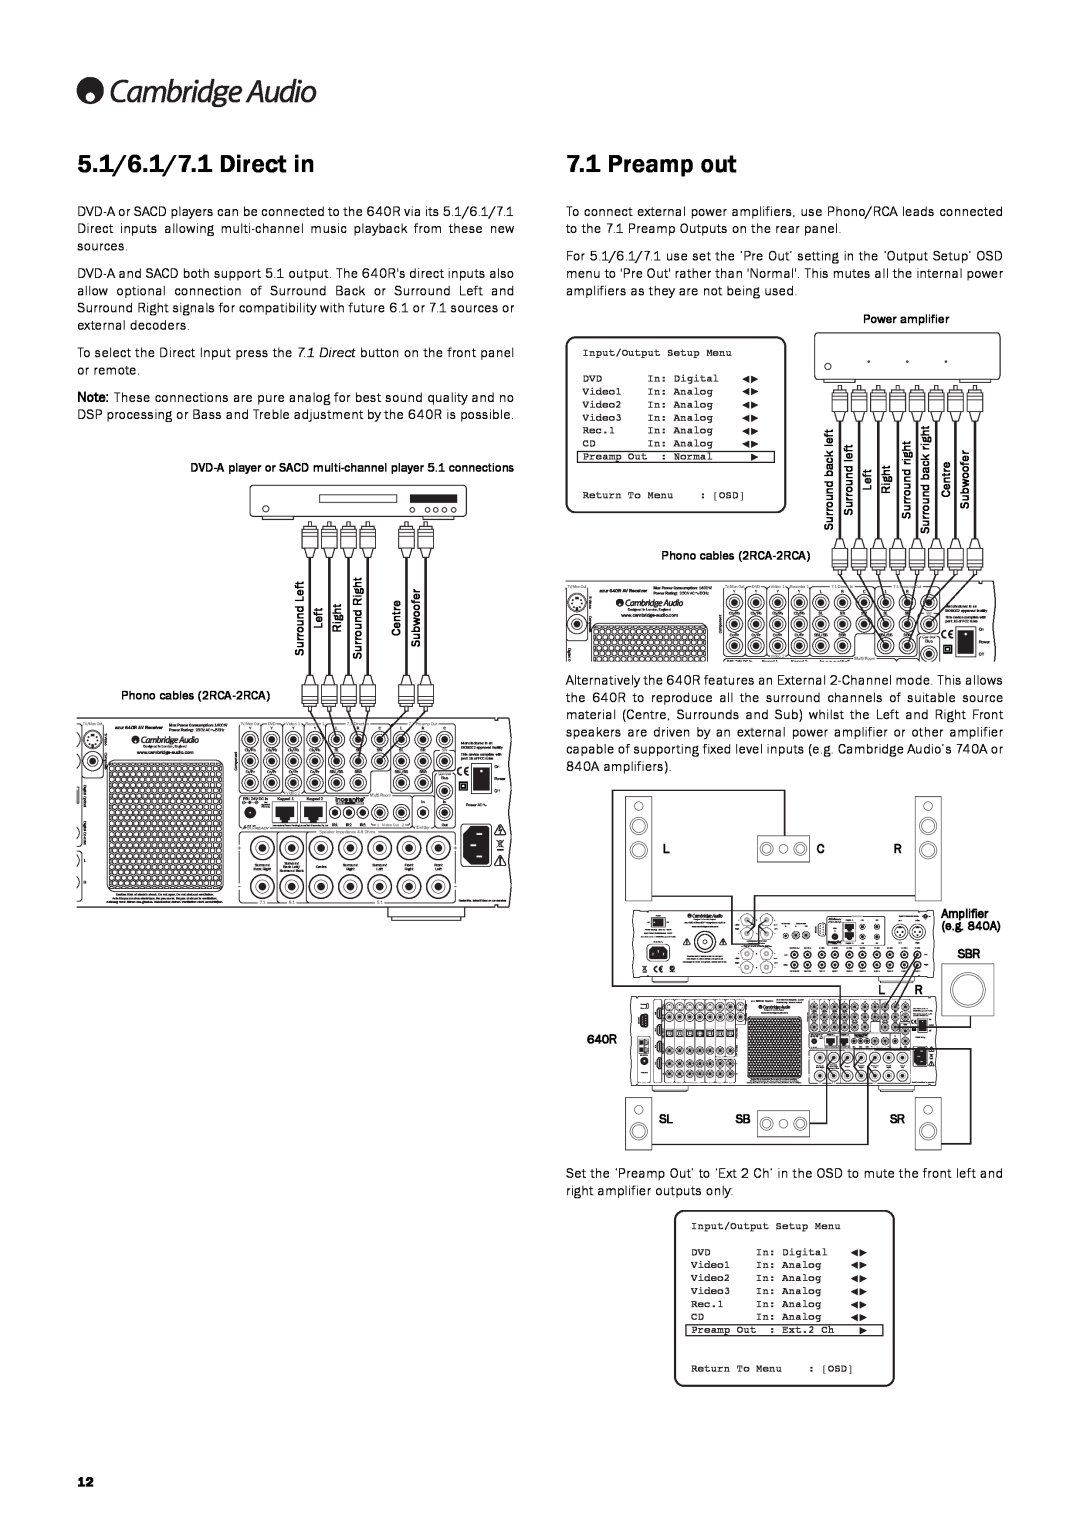 Cambridge Audio 640Razur user manual 5.1/6.1/7.1 Direct in, Preamp out 